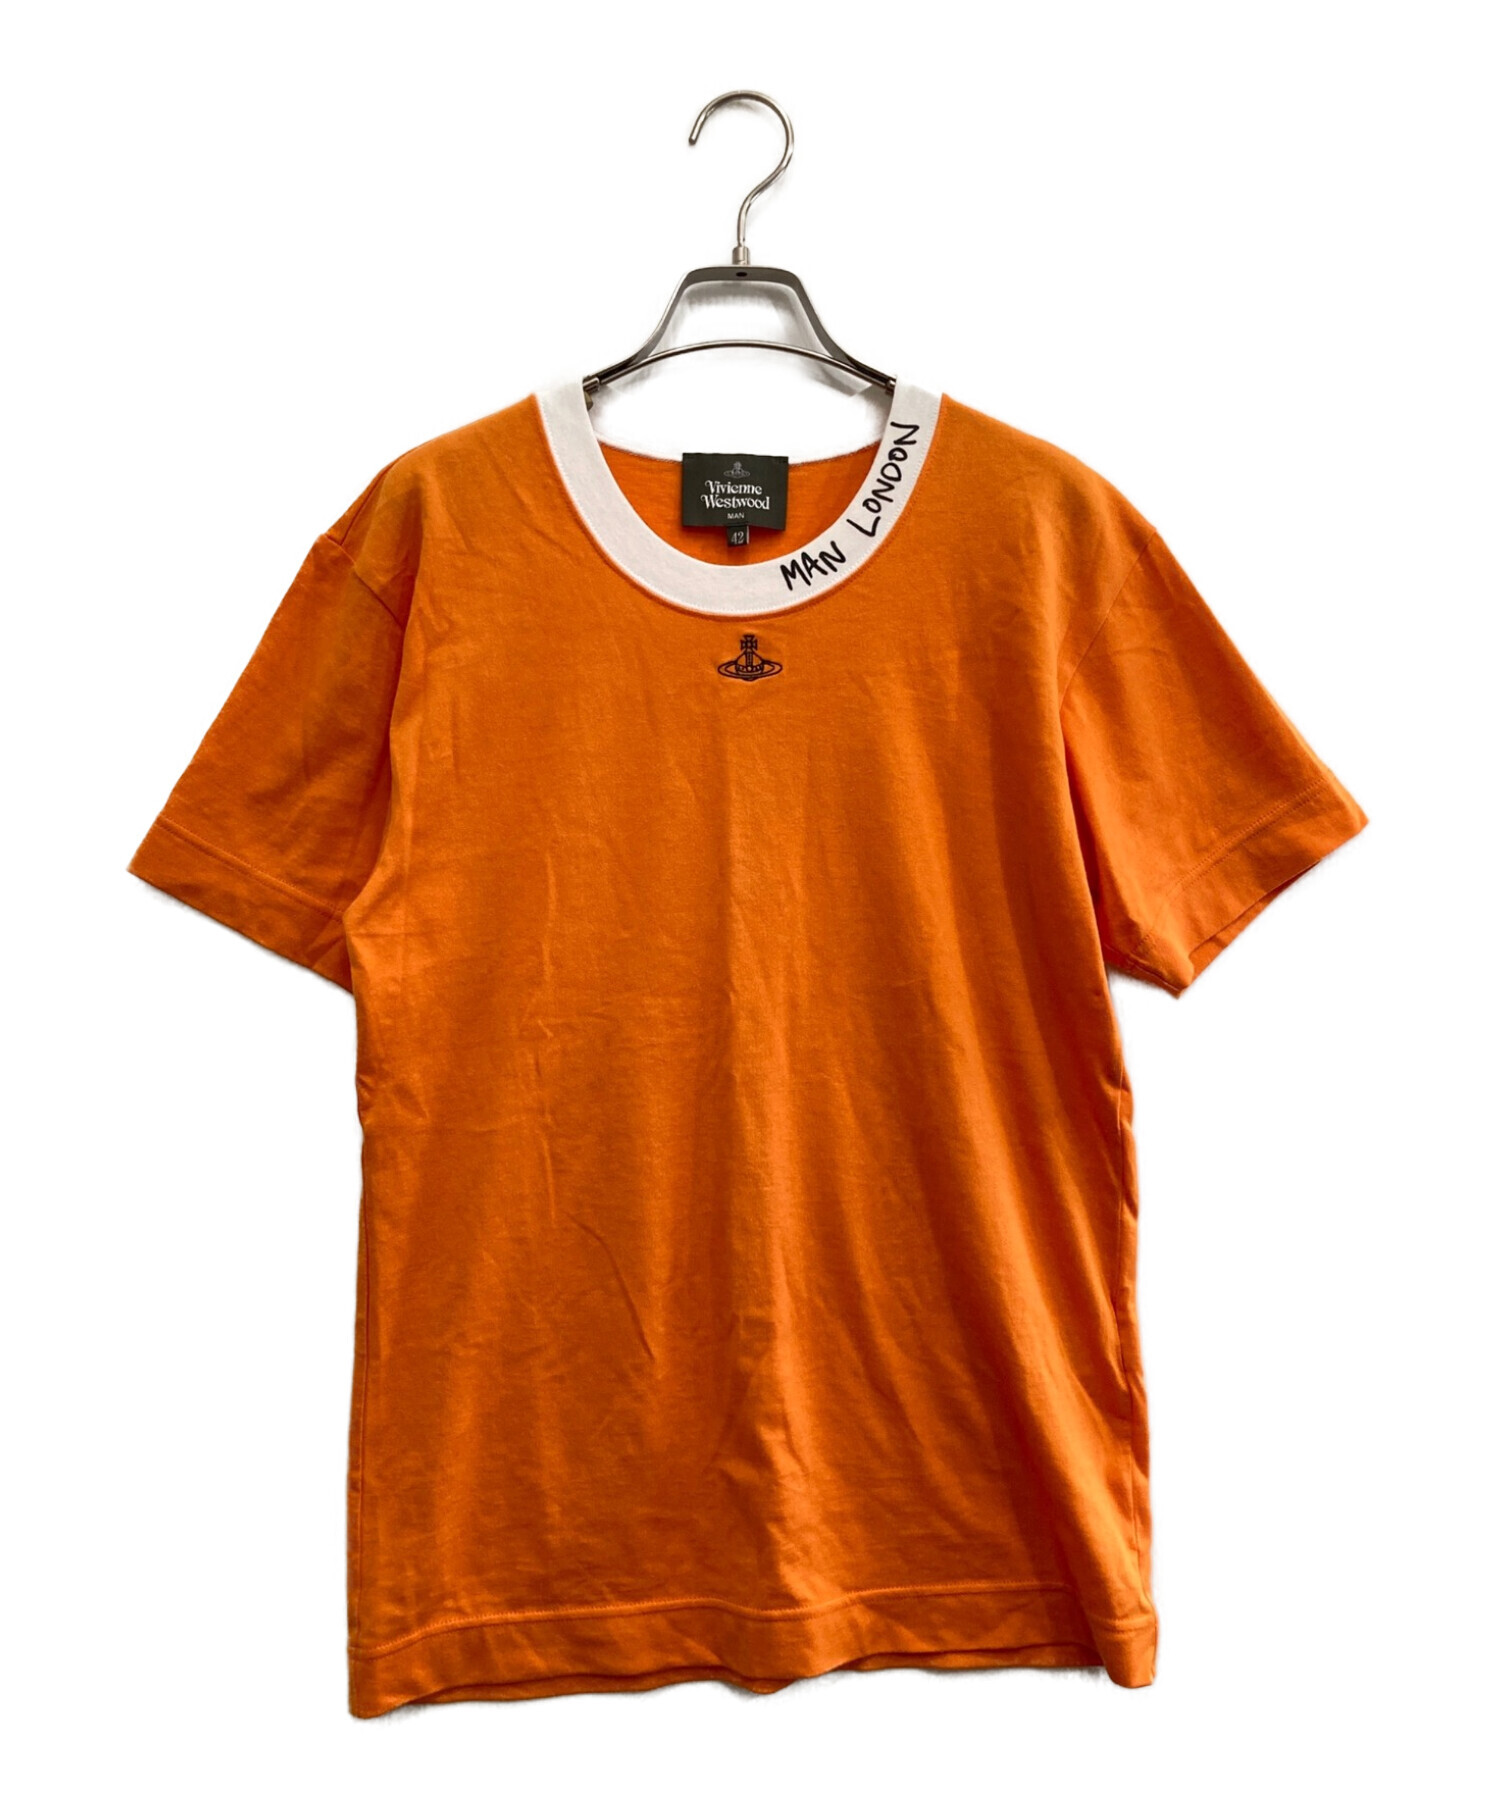 Vivienne Westwood man (ヴィヴィアン ウェストウッド マン) リンガーTシャツ オレンジ サイズ:42